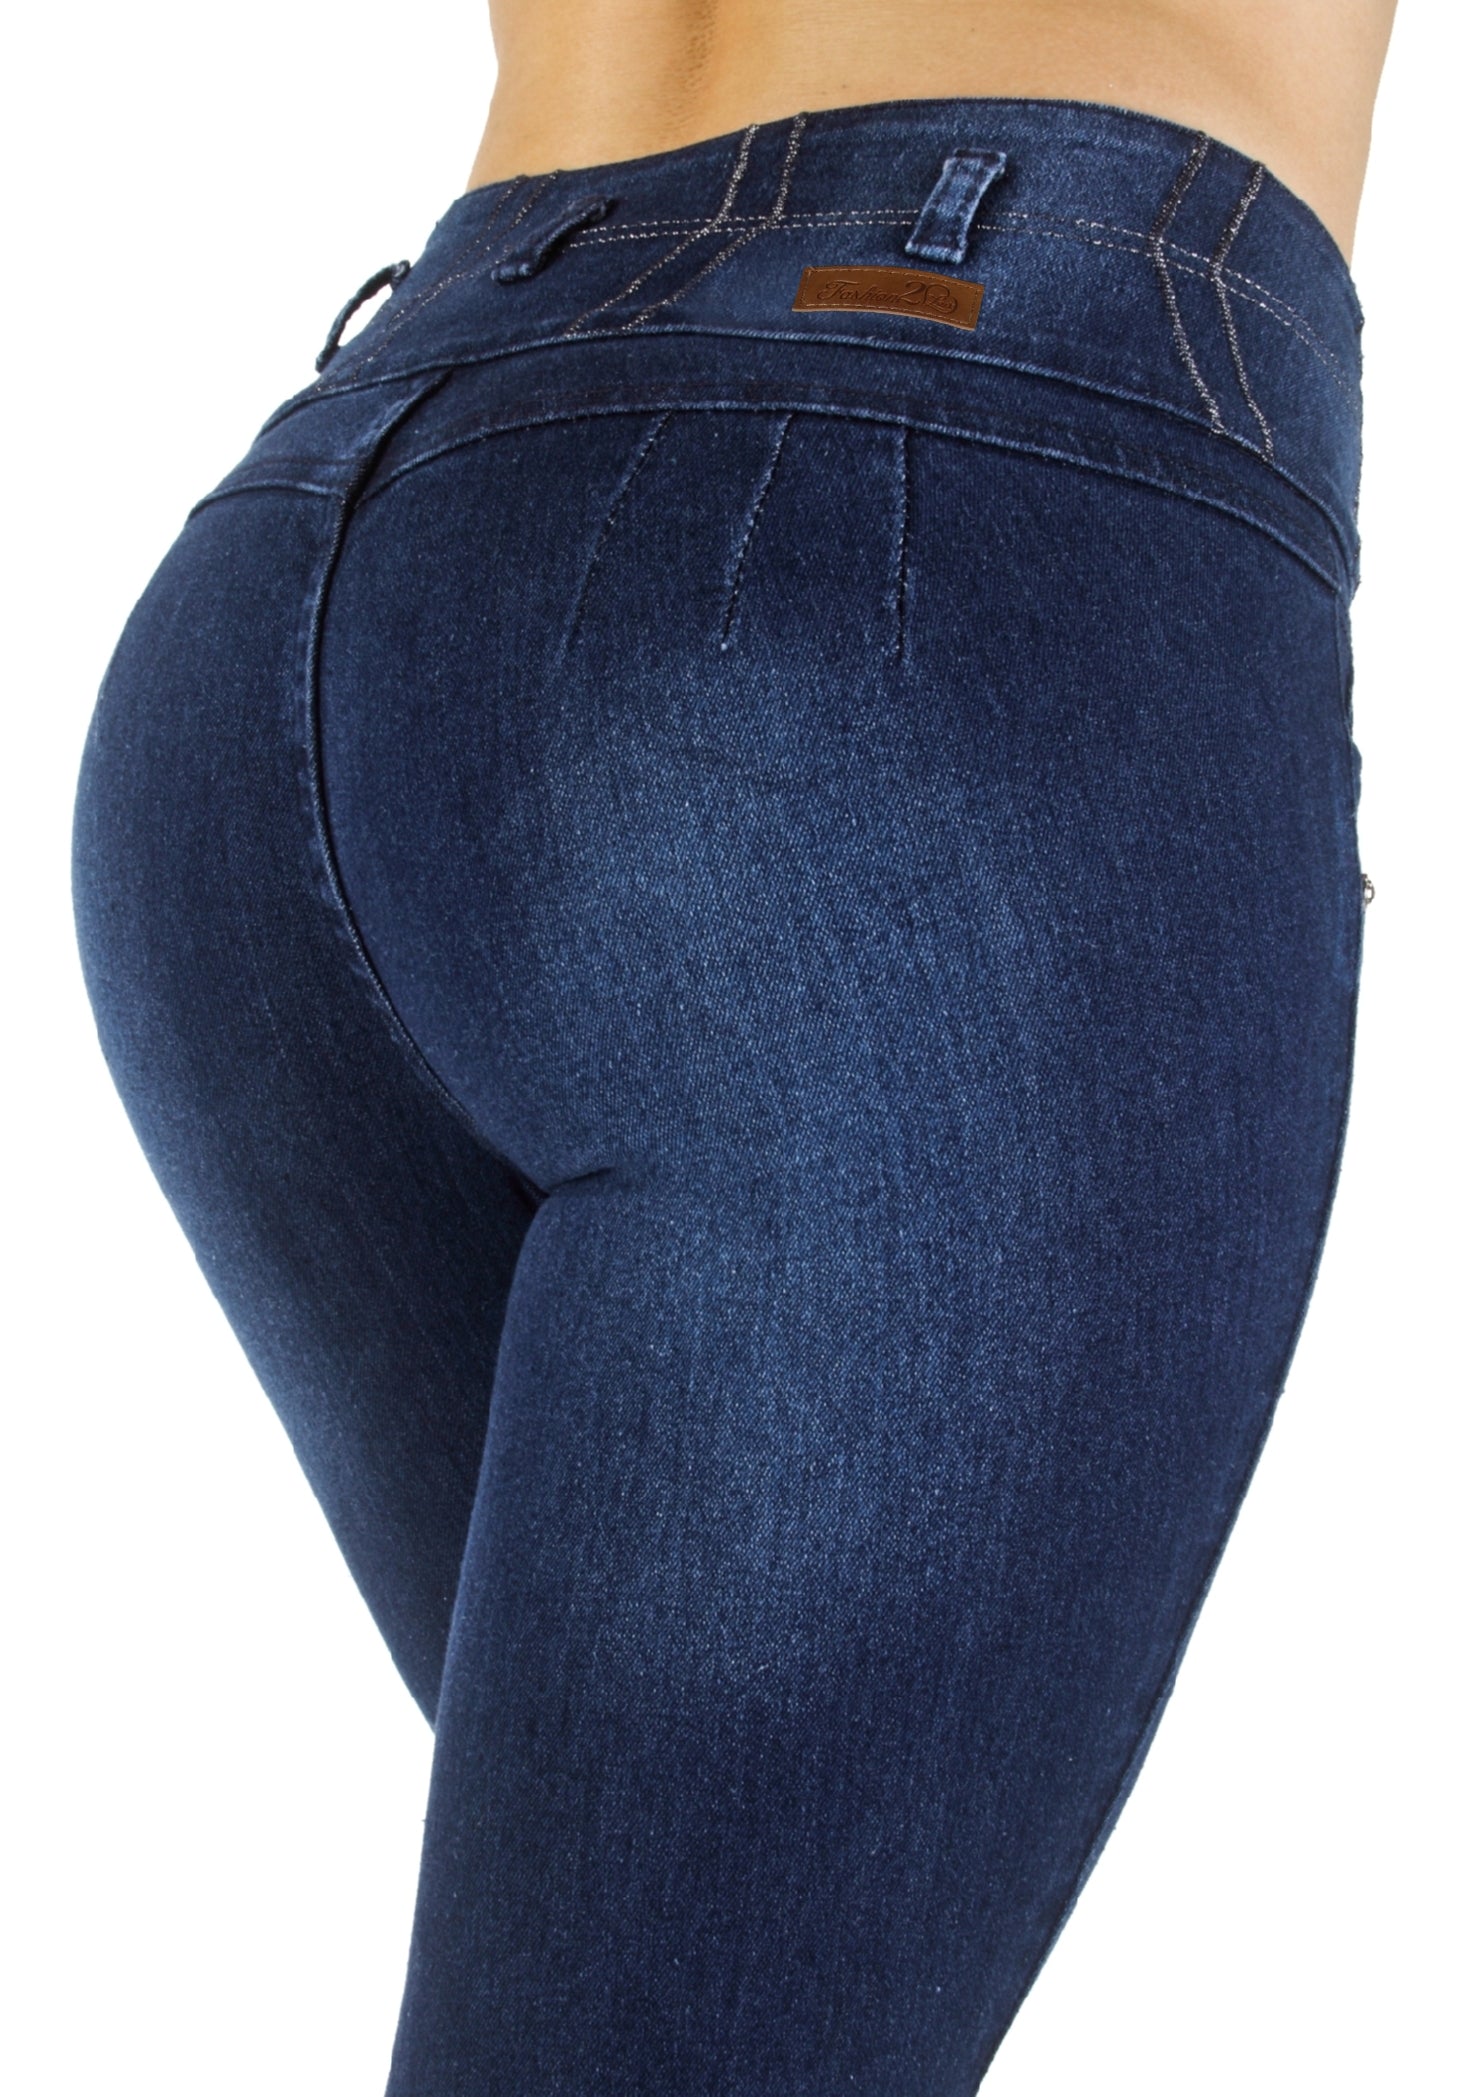 Fashion2Love FREE SHIPPING - Women s Juniors Butt Lift Push Up Super High  Waist Skinny Jeans